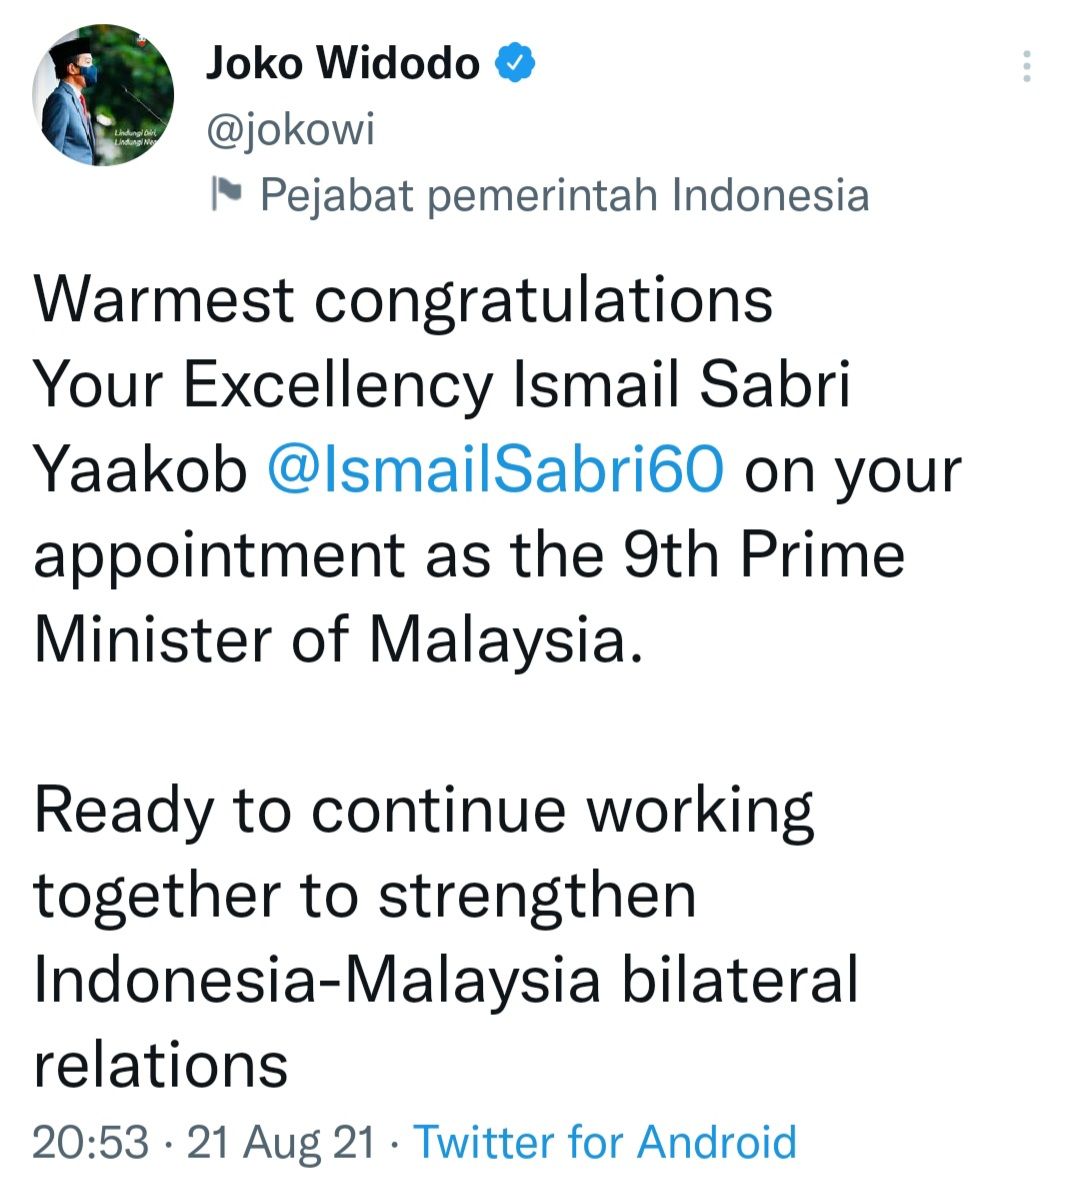 Cuitan Presiden Jokowi.